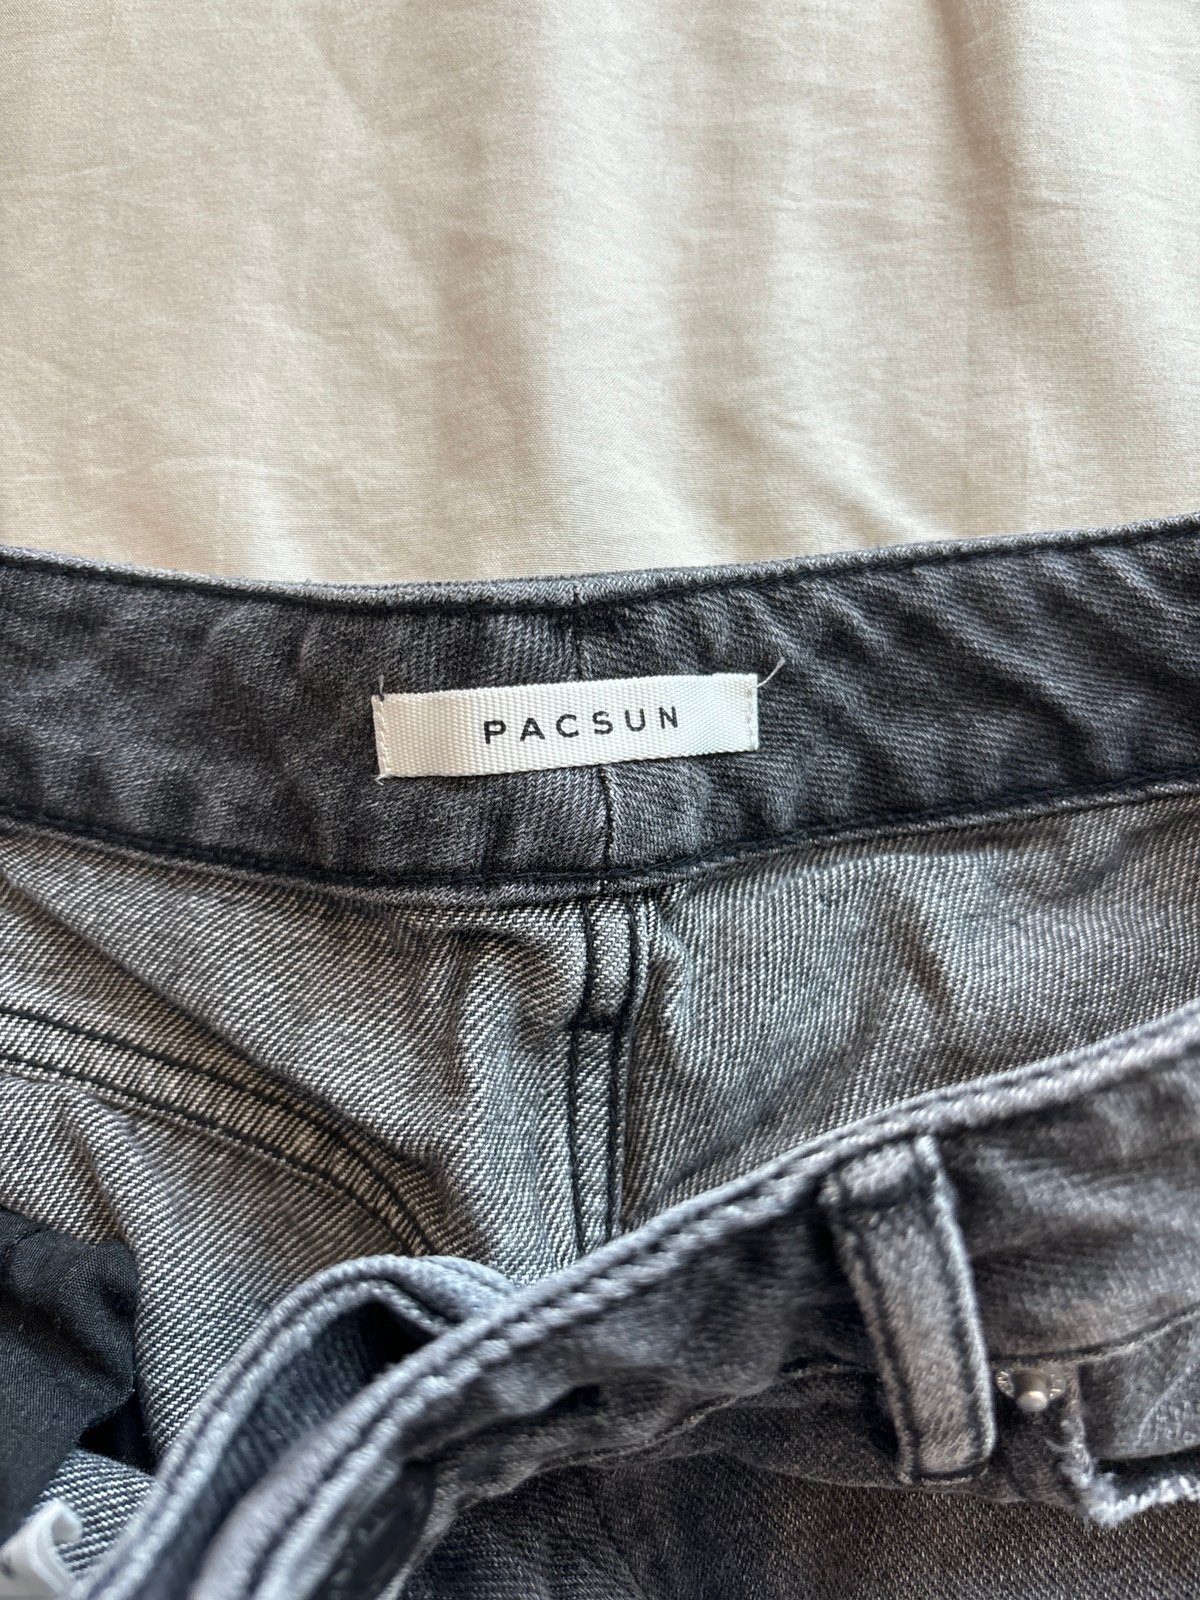 Affordable PacSun Mom Jeans pr50lidra Cheap